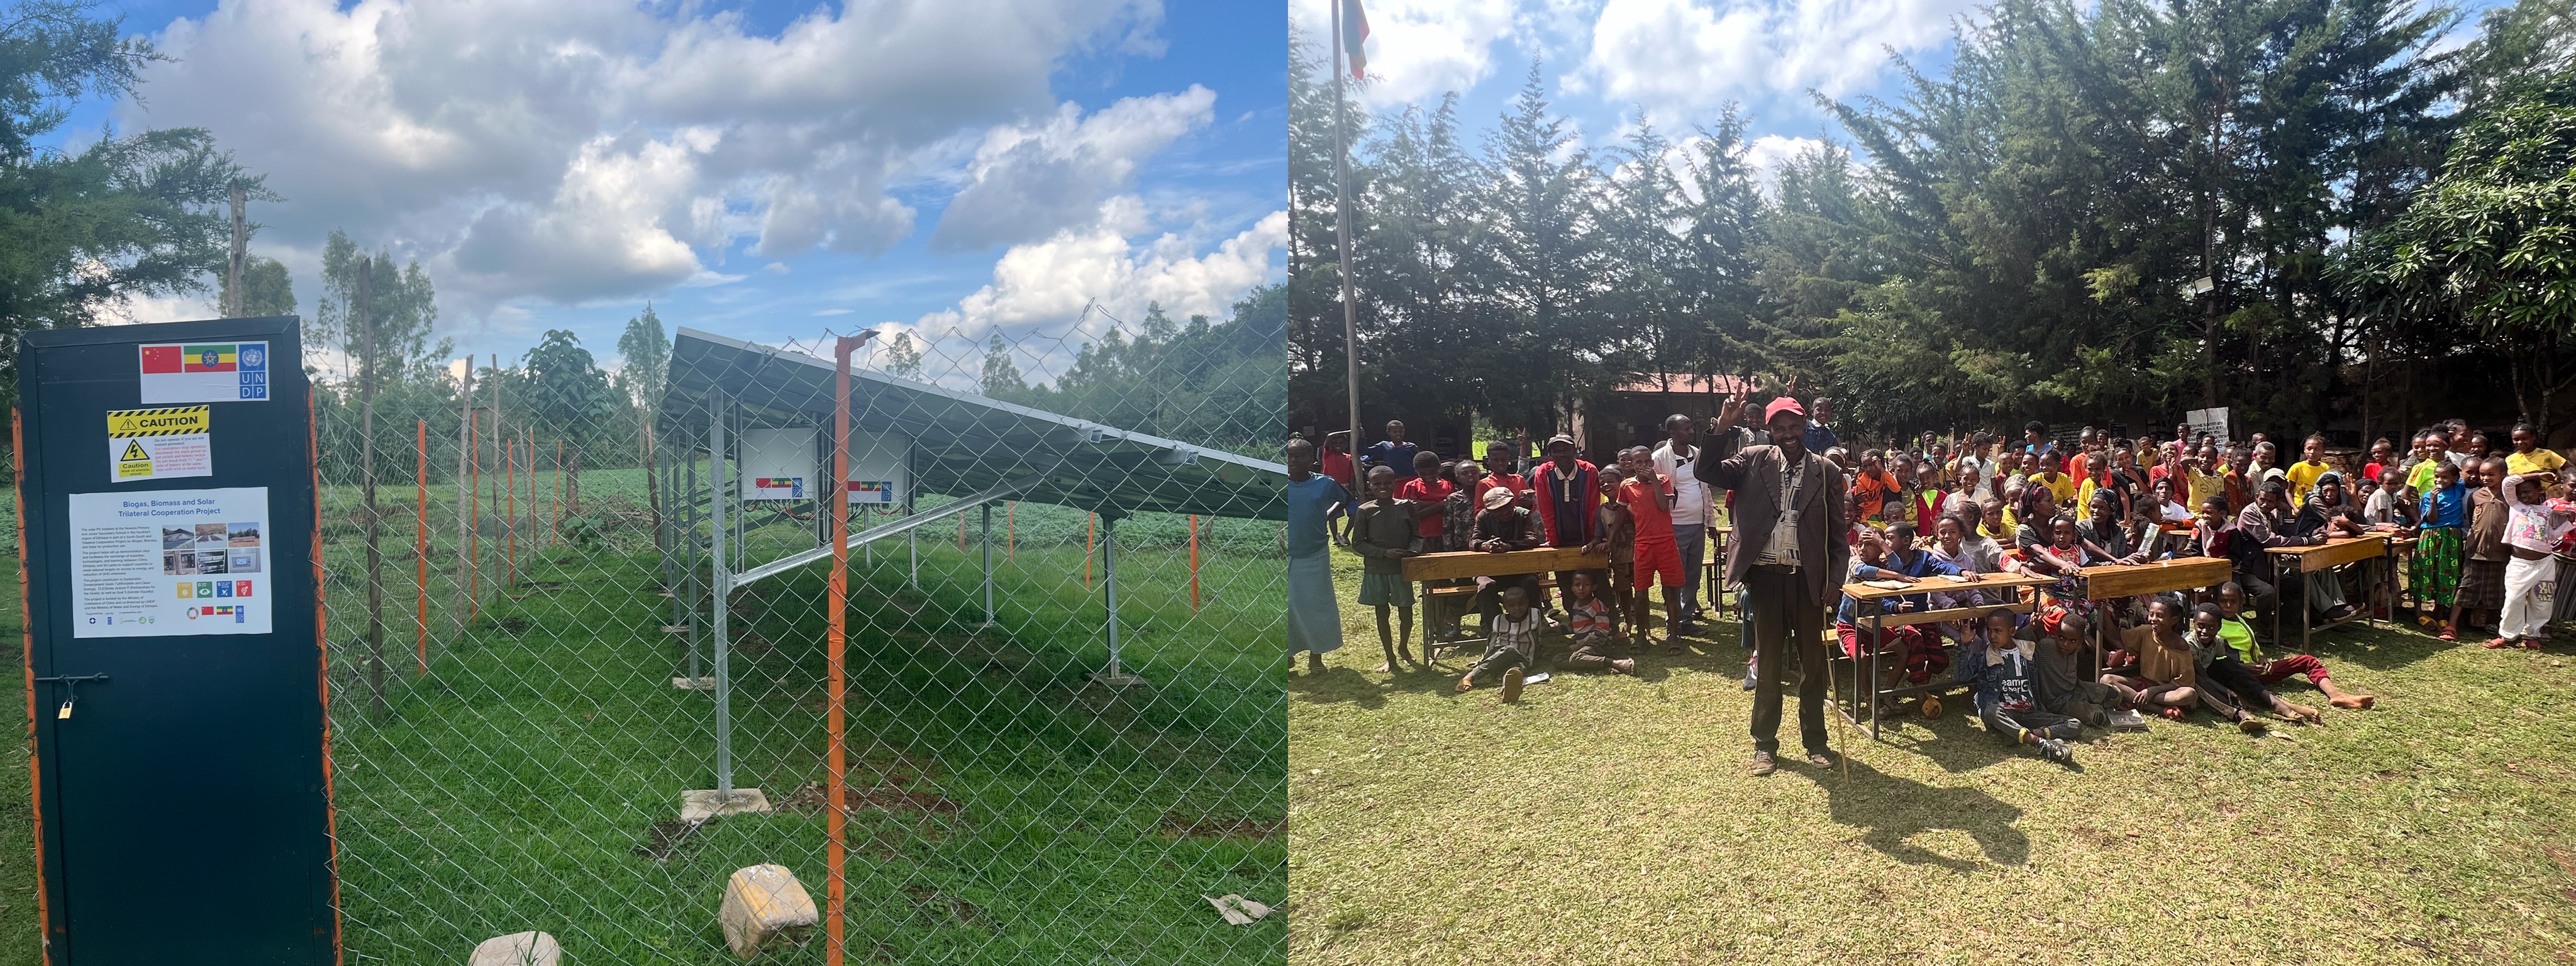 solar panels installed at schools in Ethiopia